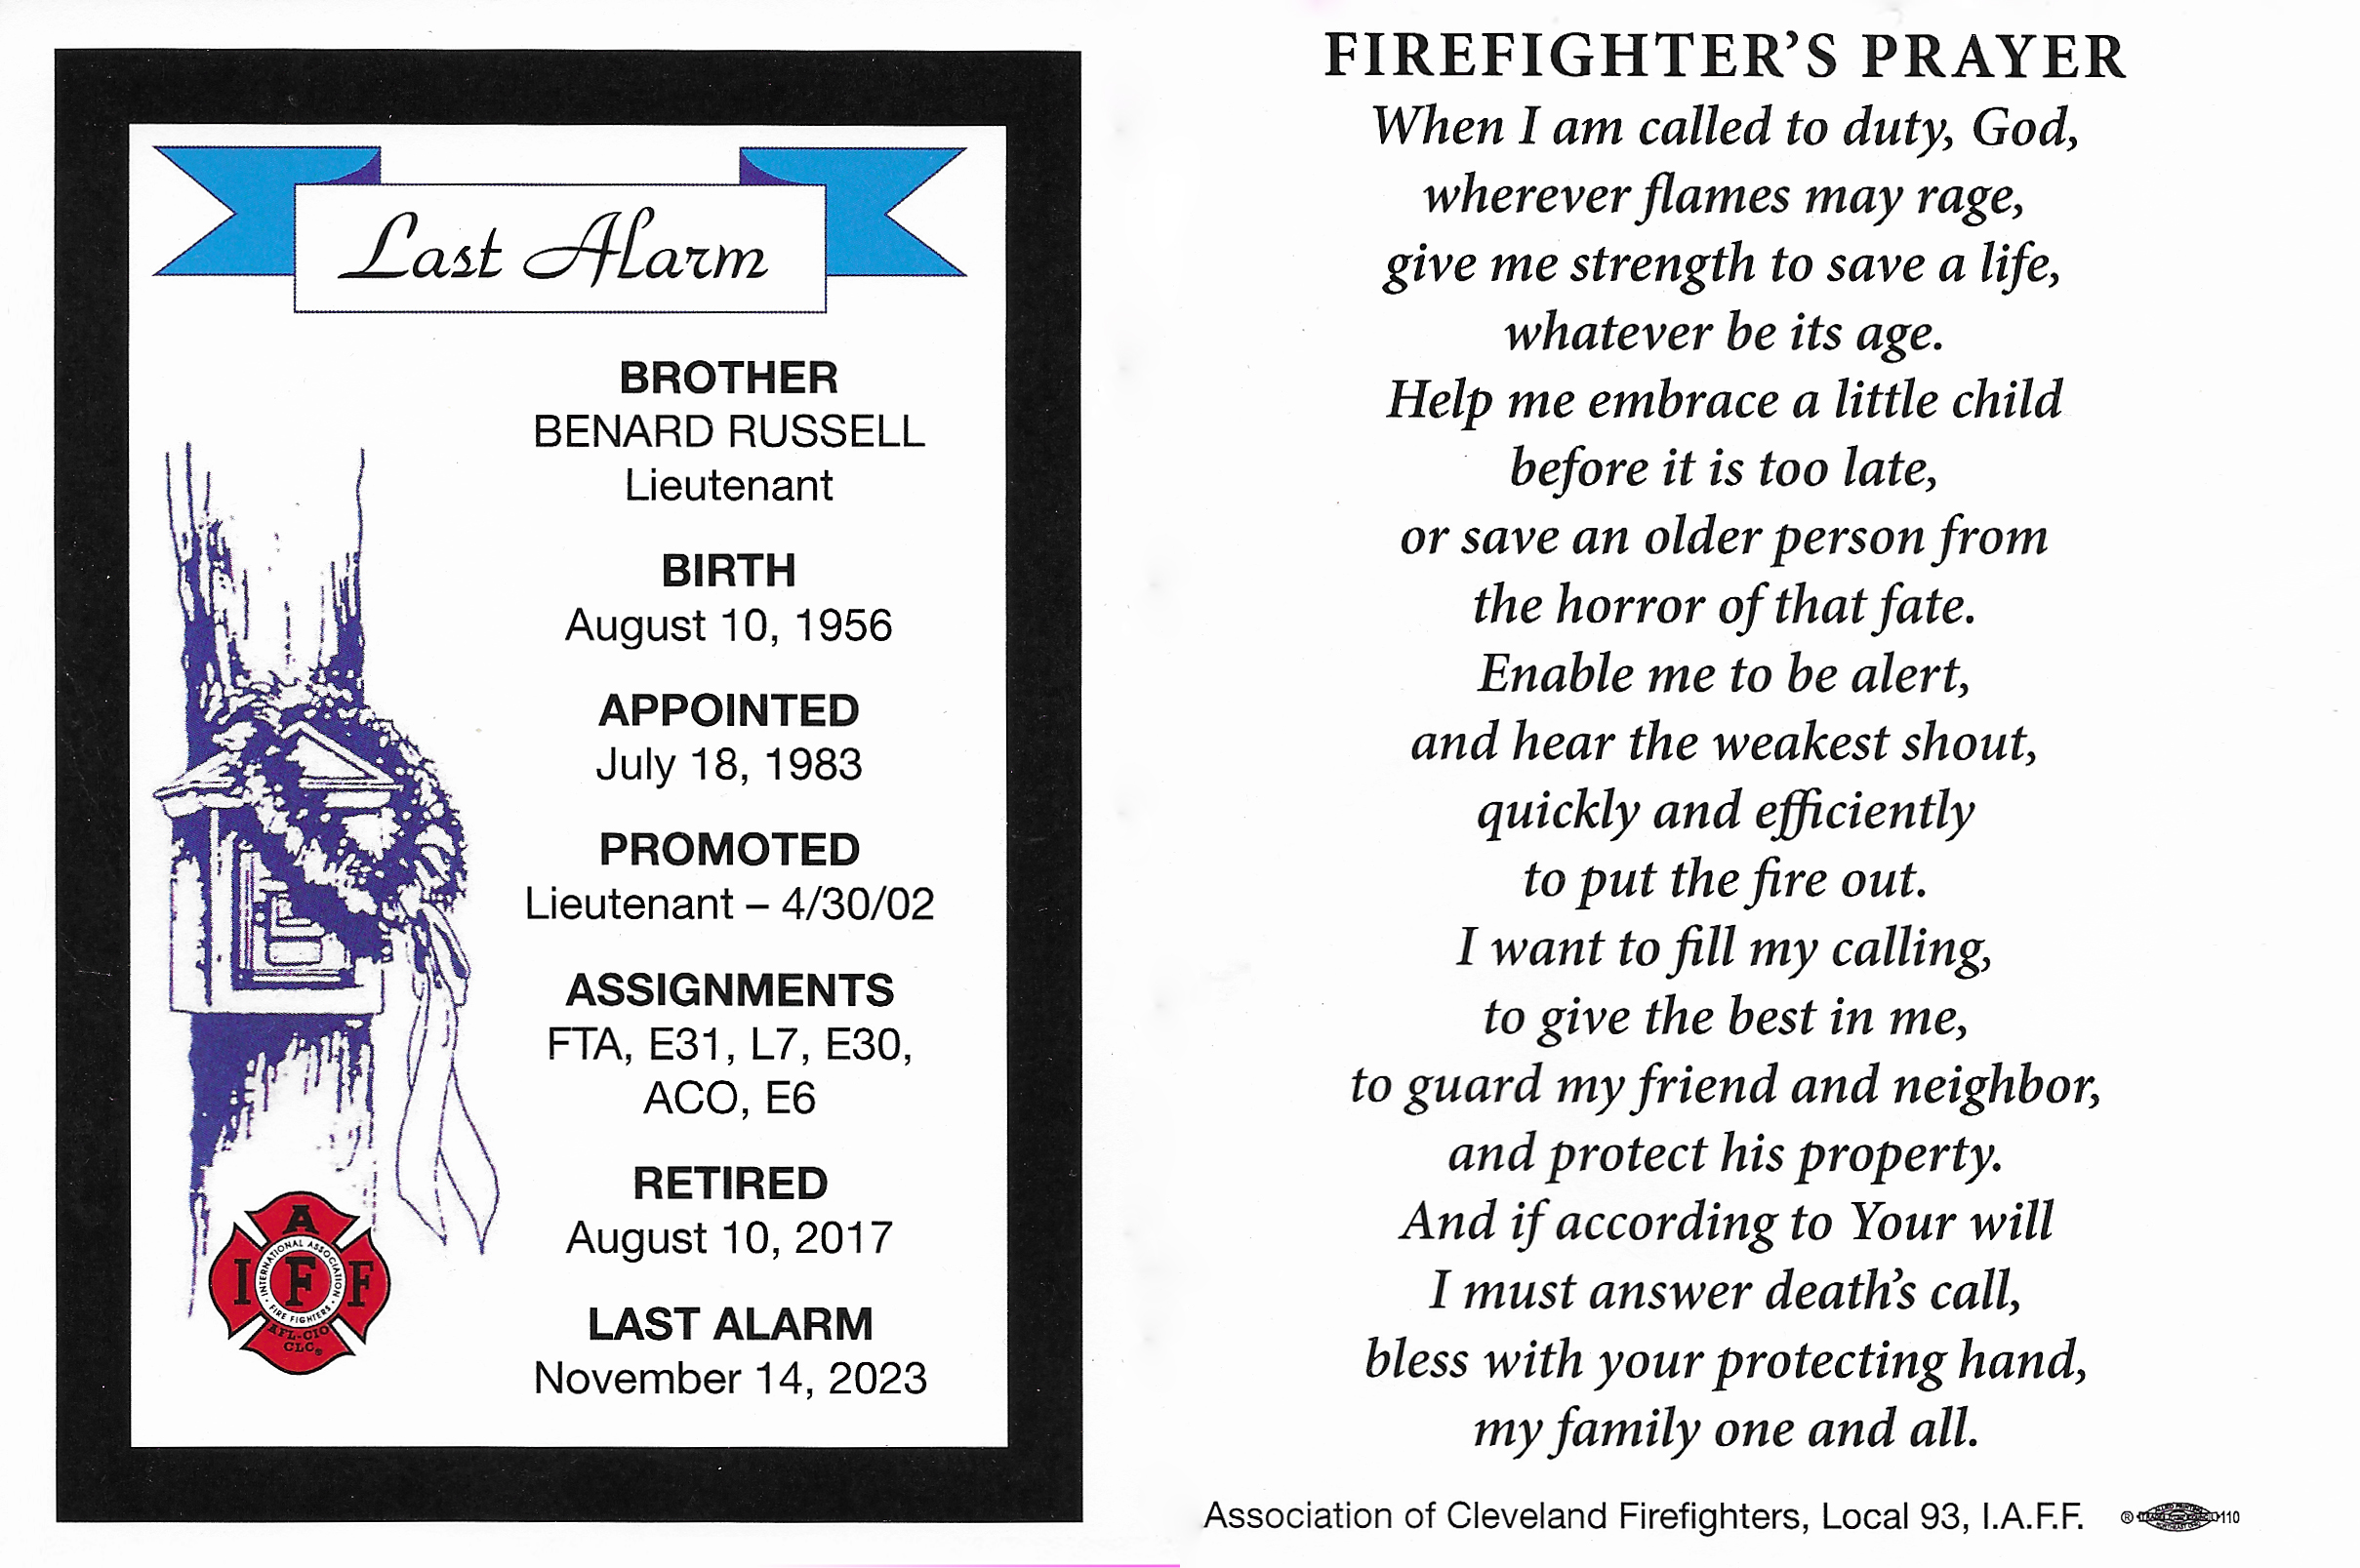 Last Alarm - Fireman's Prayer